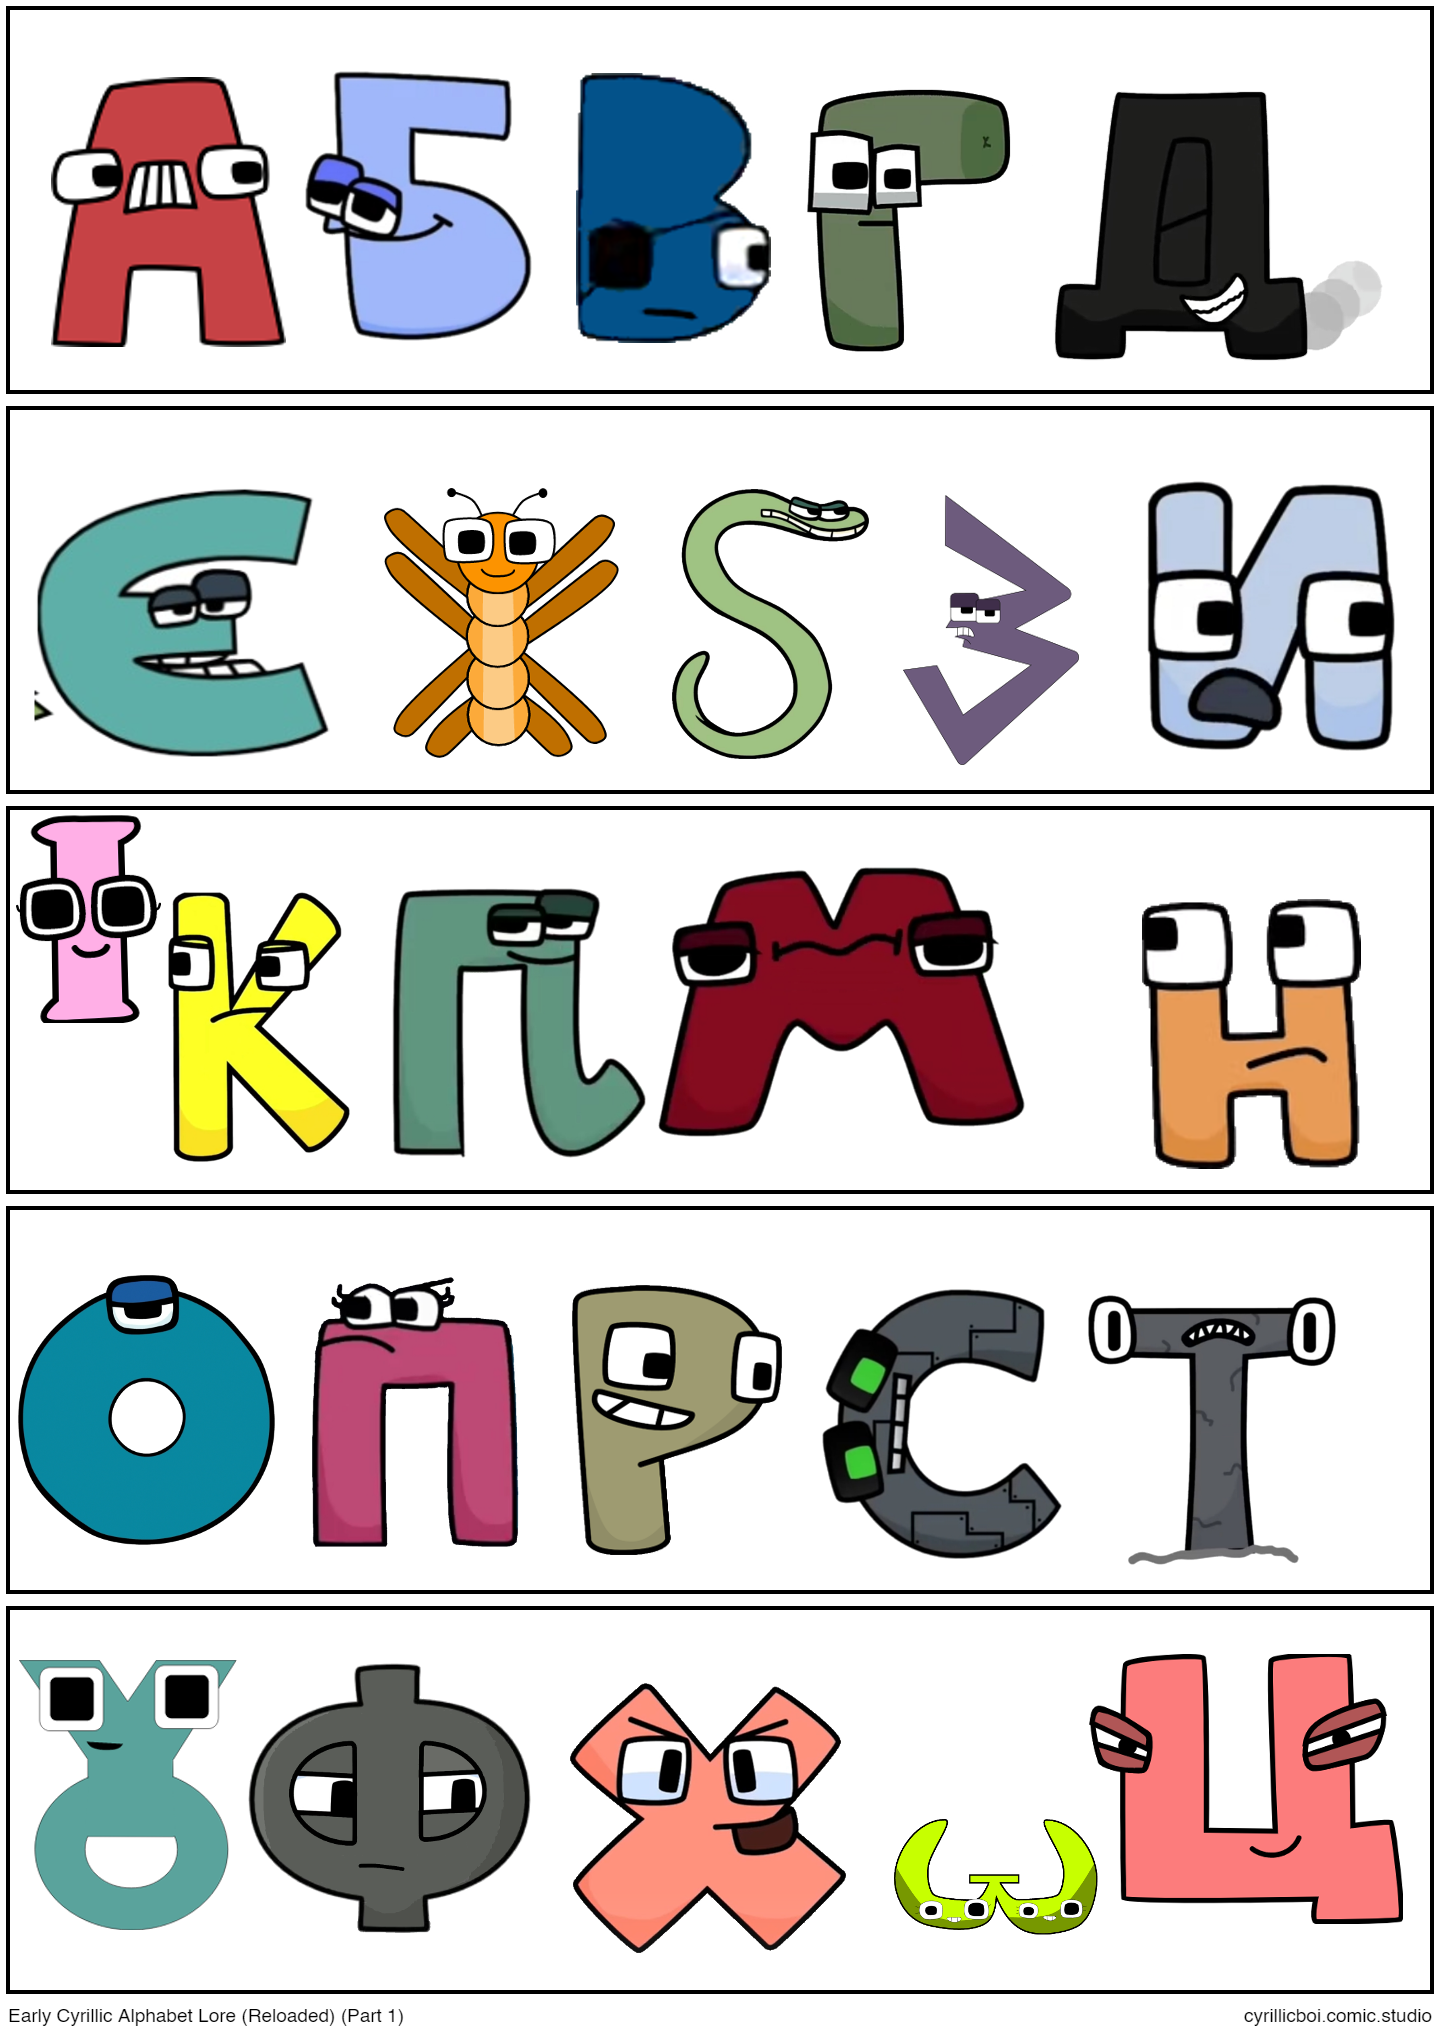 Browse (Early) Cyrillic Alphabet Lore Comics - Comic Studio